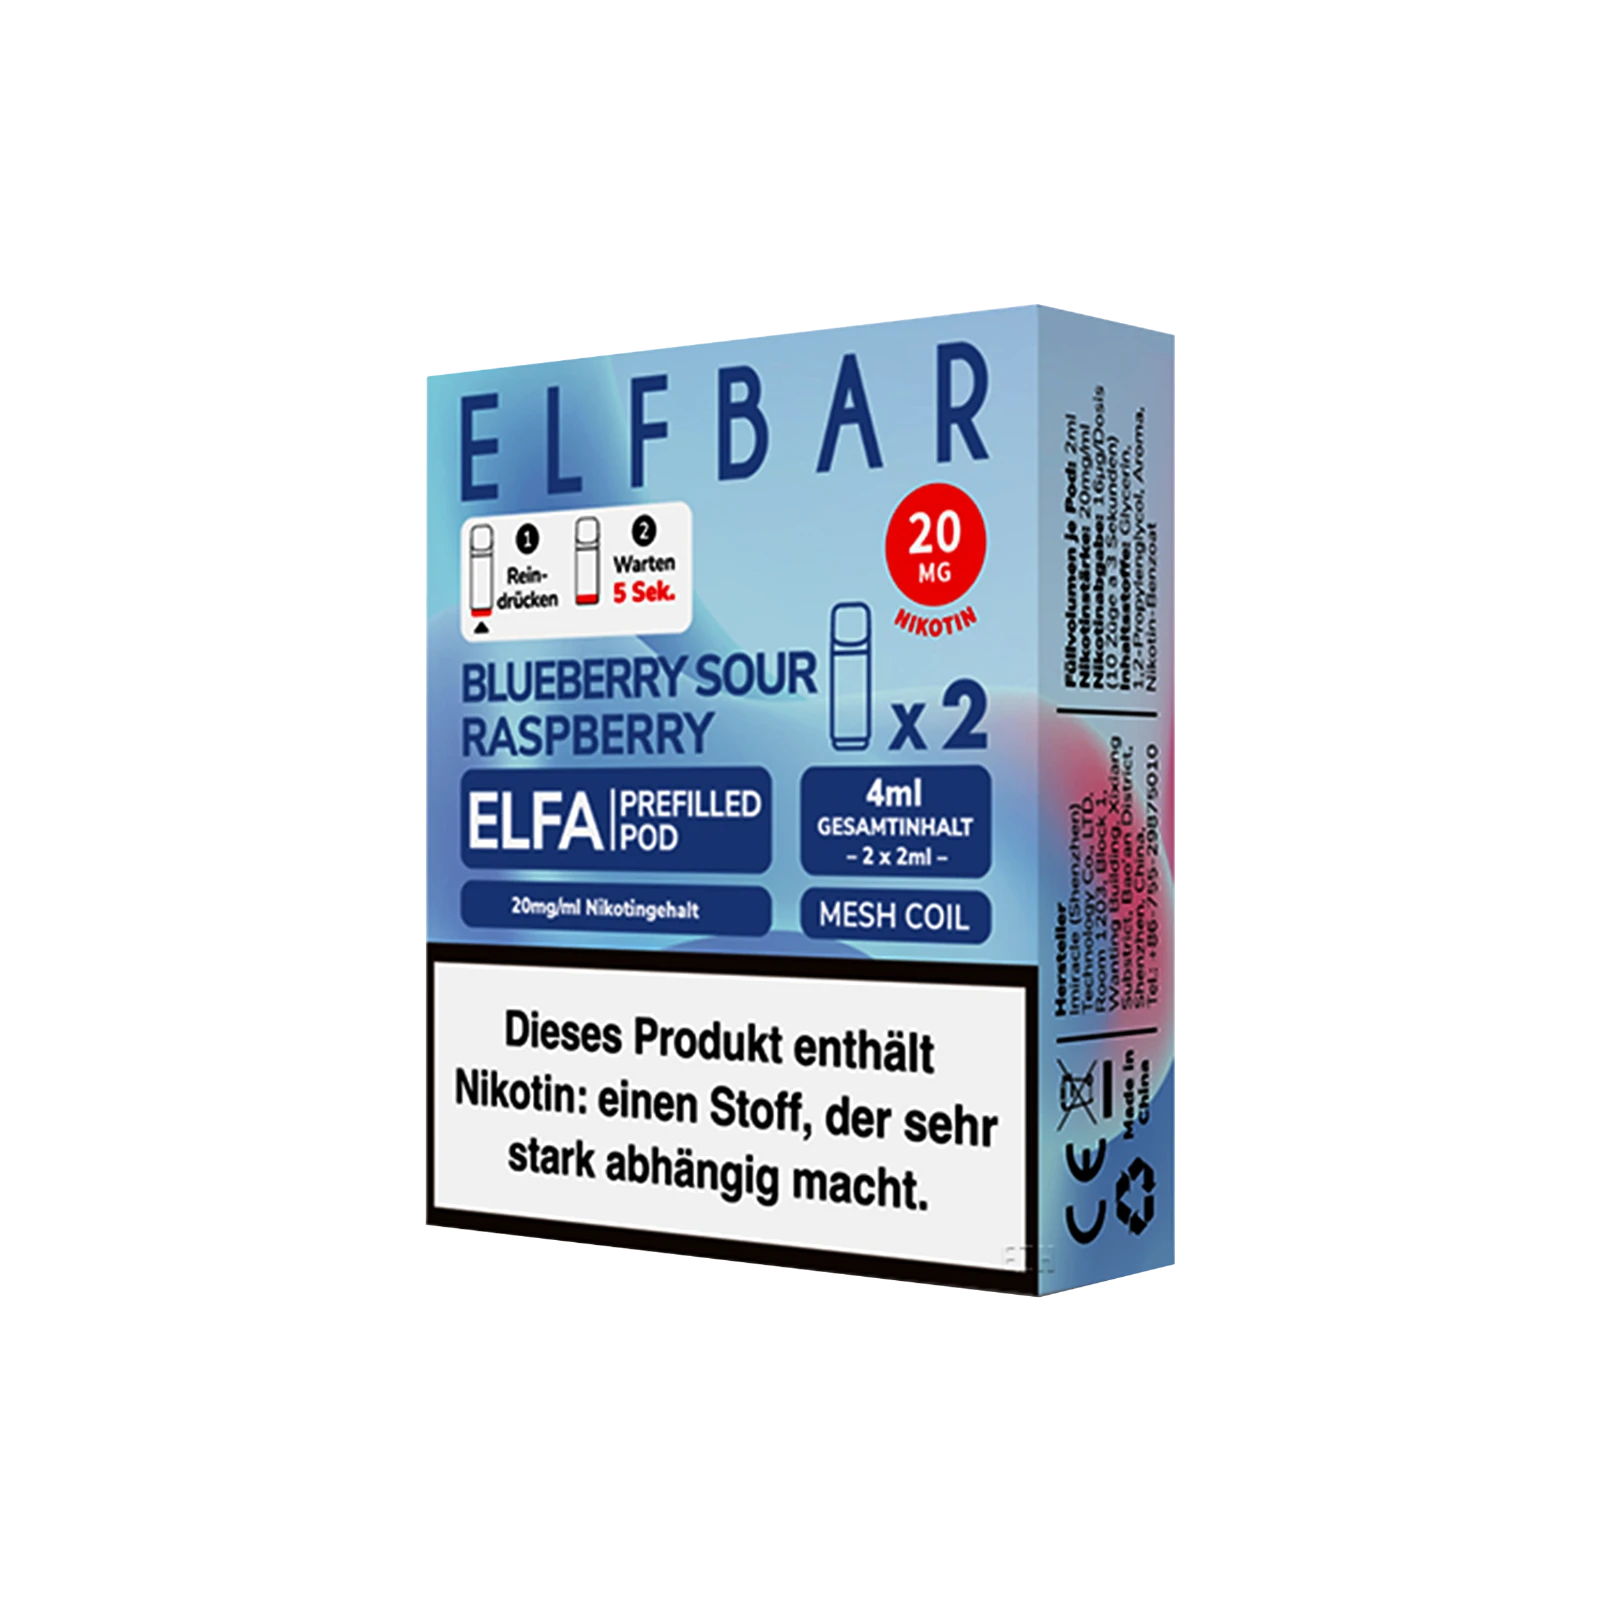 Elf Bar ELFA Prefilled Pod Blueberry Sour Raspberry | Neue Liquid Sorten